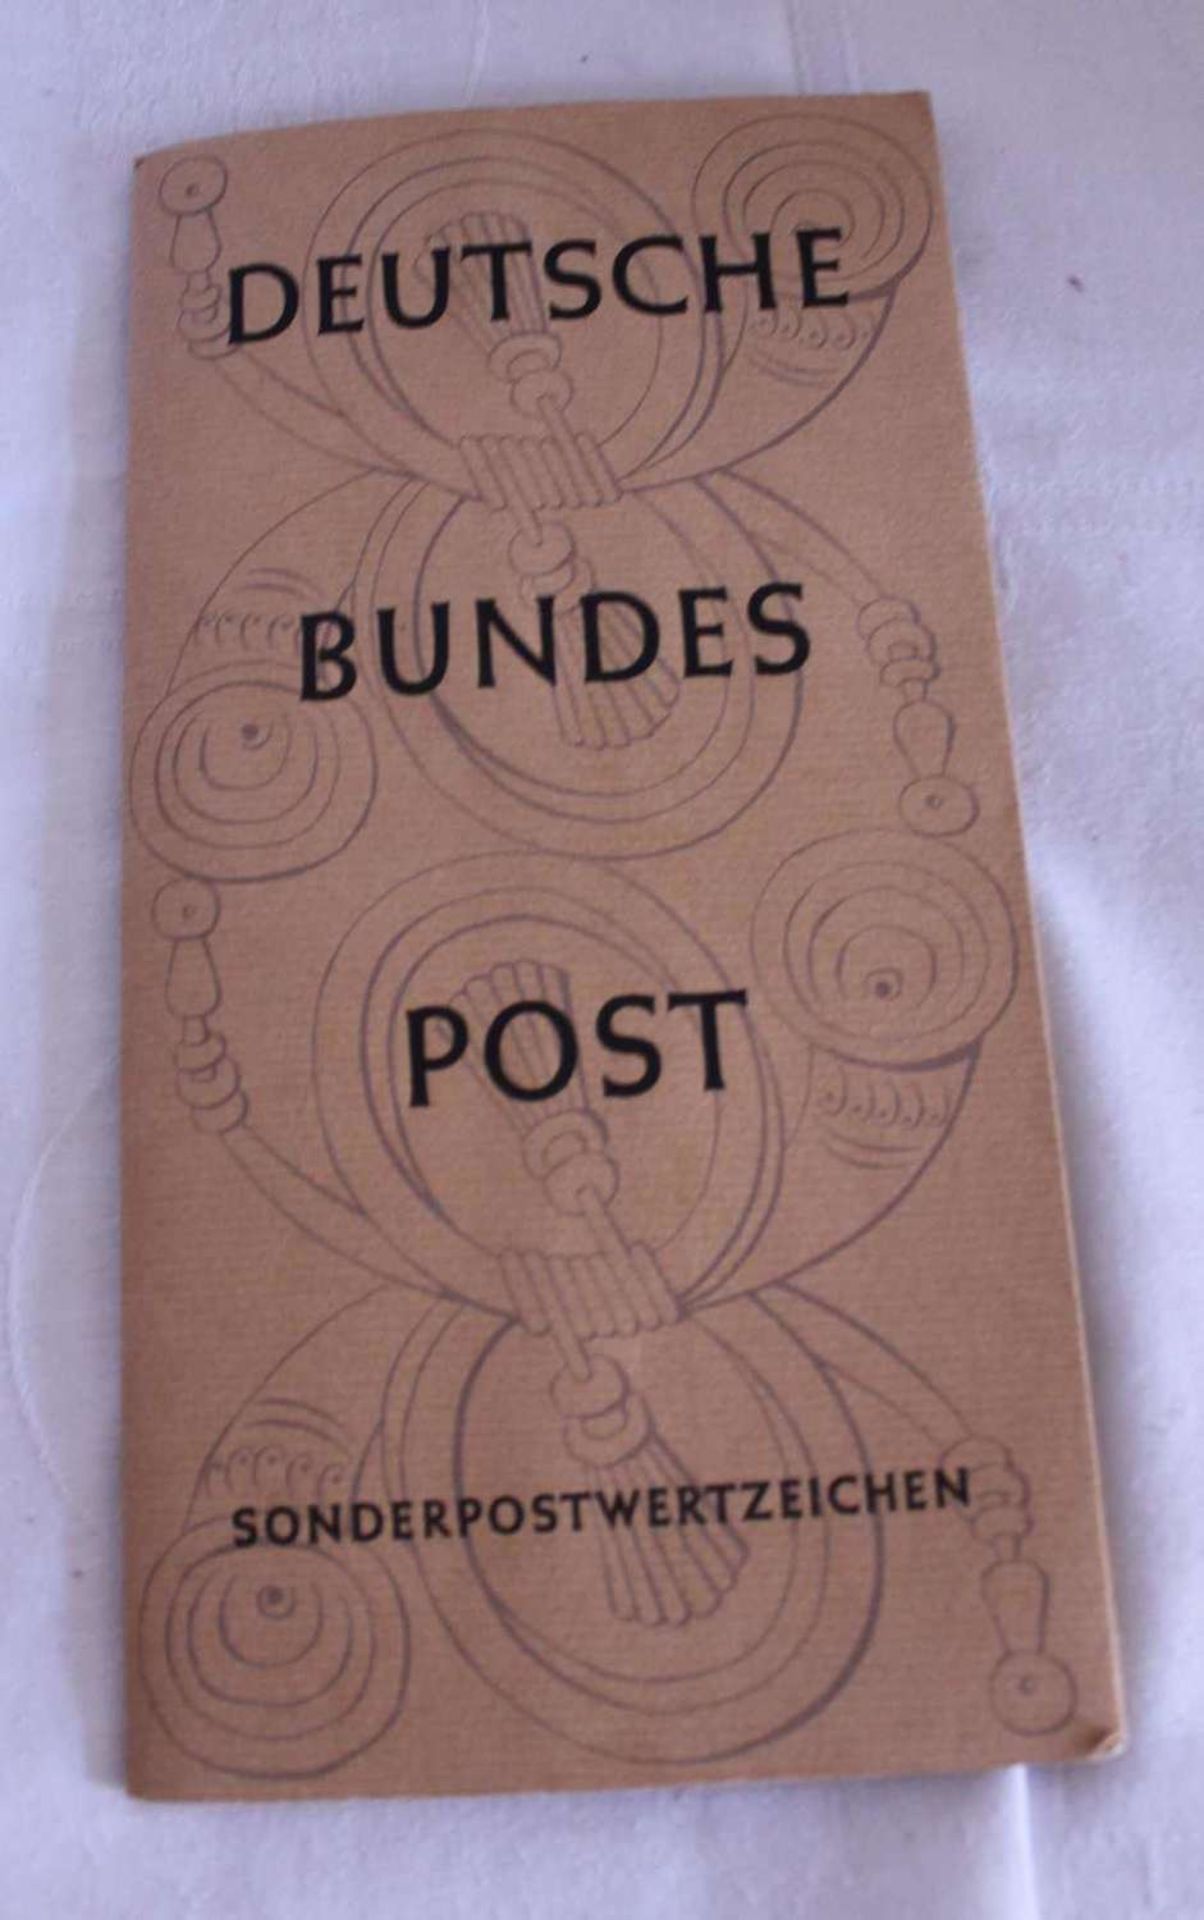 Deutsche Bundespost, special postage stamp promotion Postsparkasse 1964, special postage stamps 1962